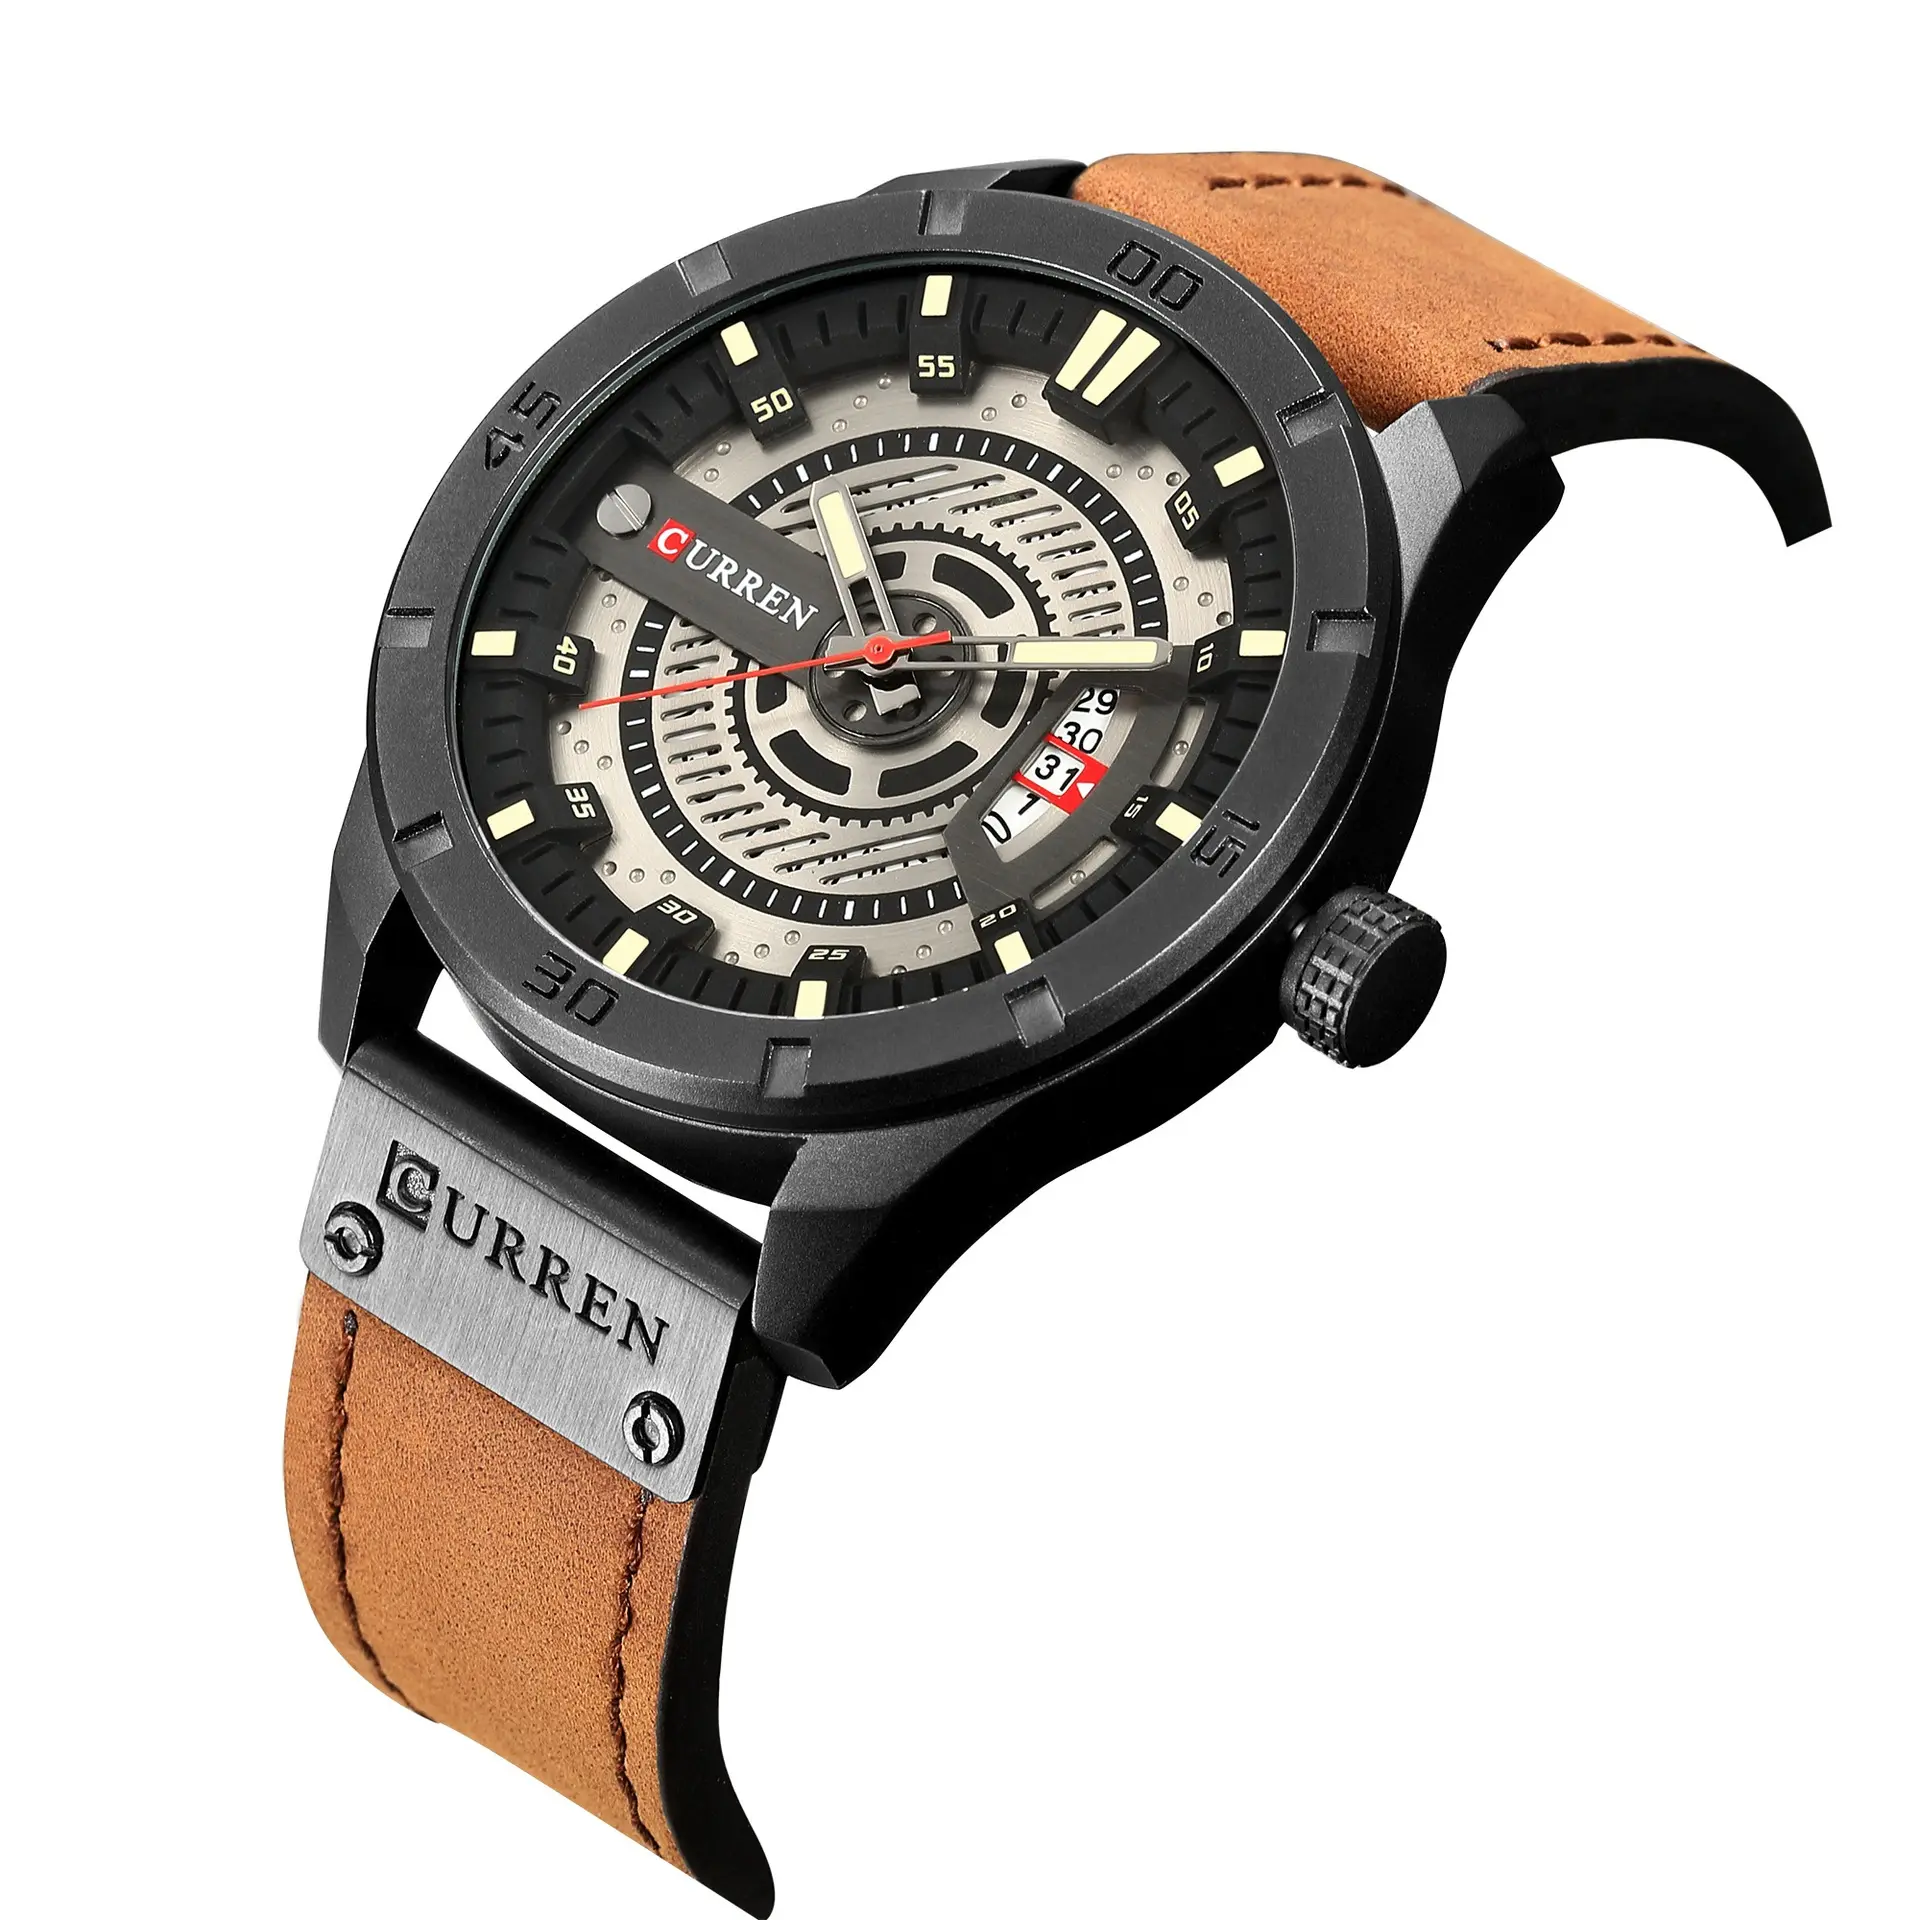 Curren 8301 Top Brand Men's Sports Watches Leather Strap Business Fashion Date Clock Quartz Analog Luxury Watch Men New